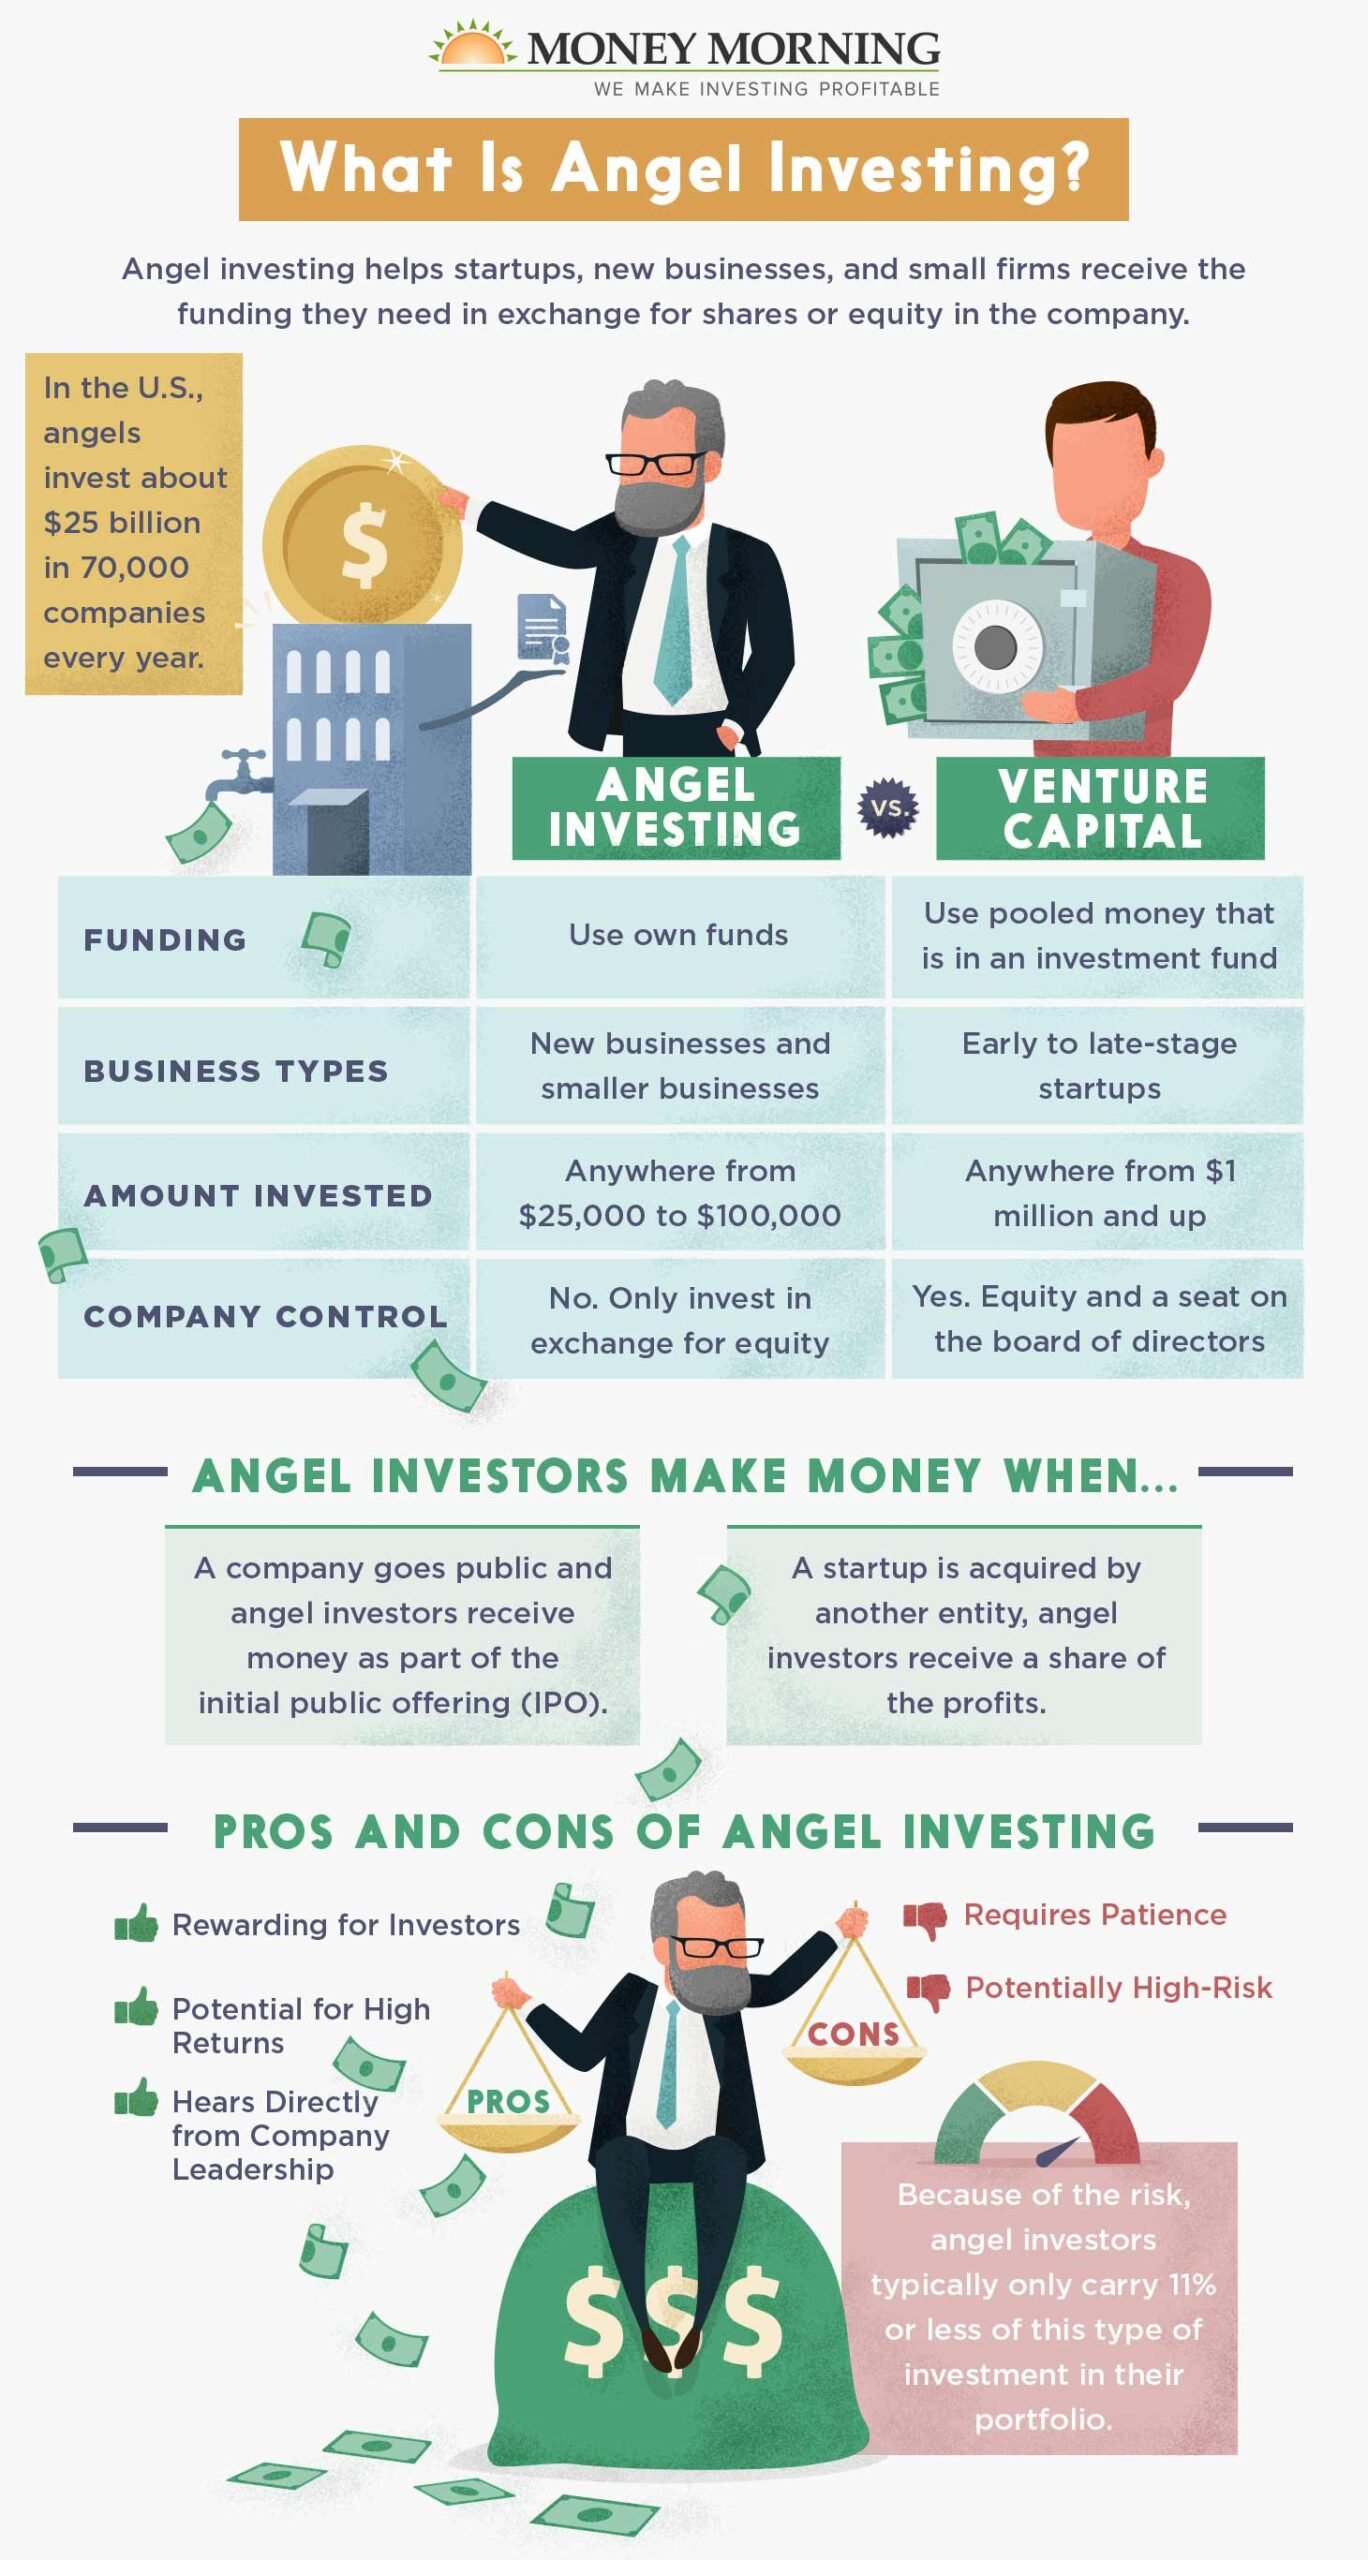 How Do Investors Help a Business?